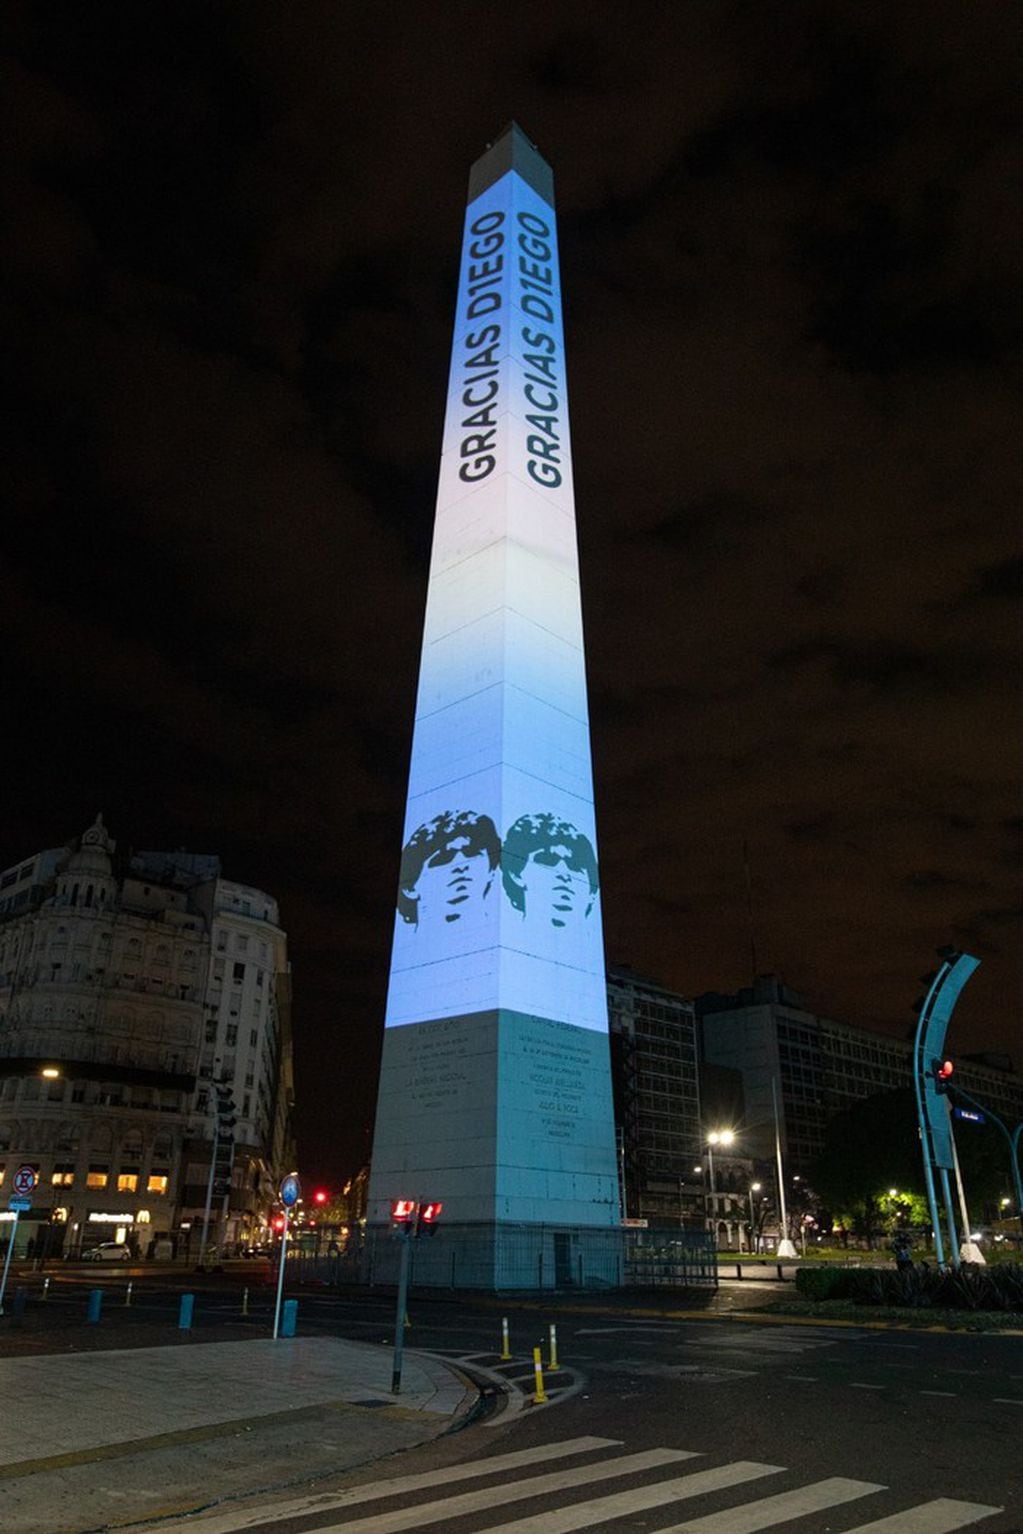 Obelisco iluminado con Maradona